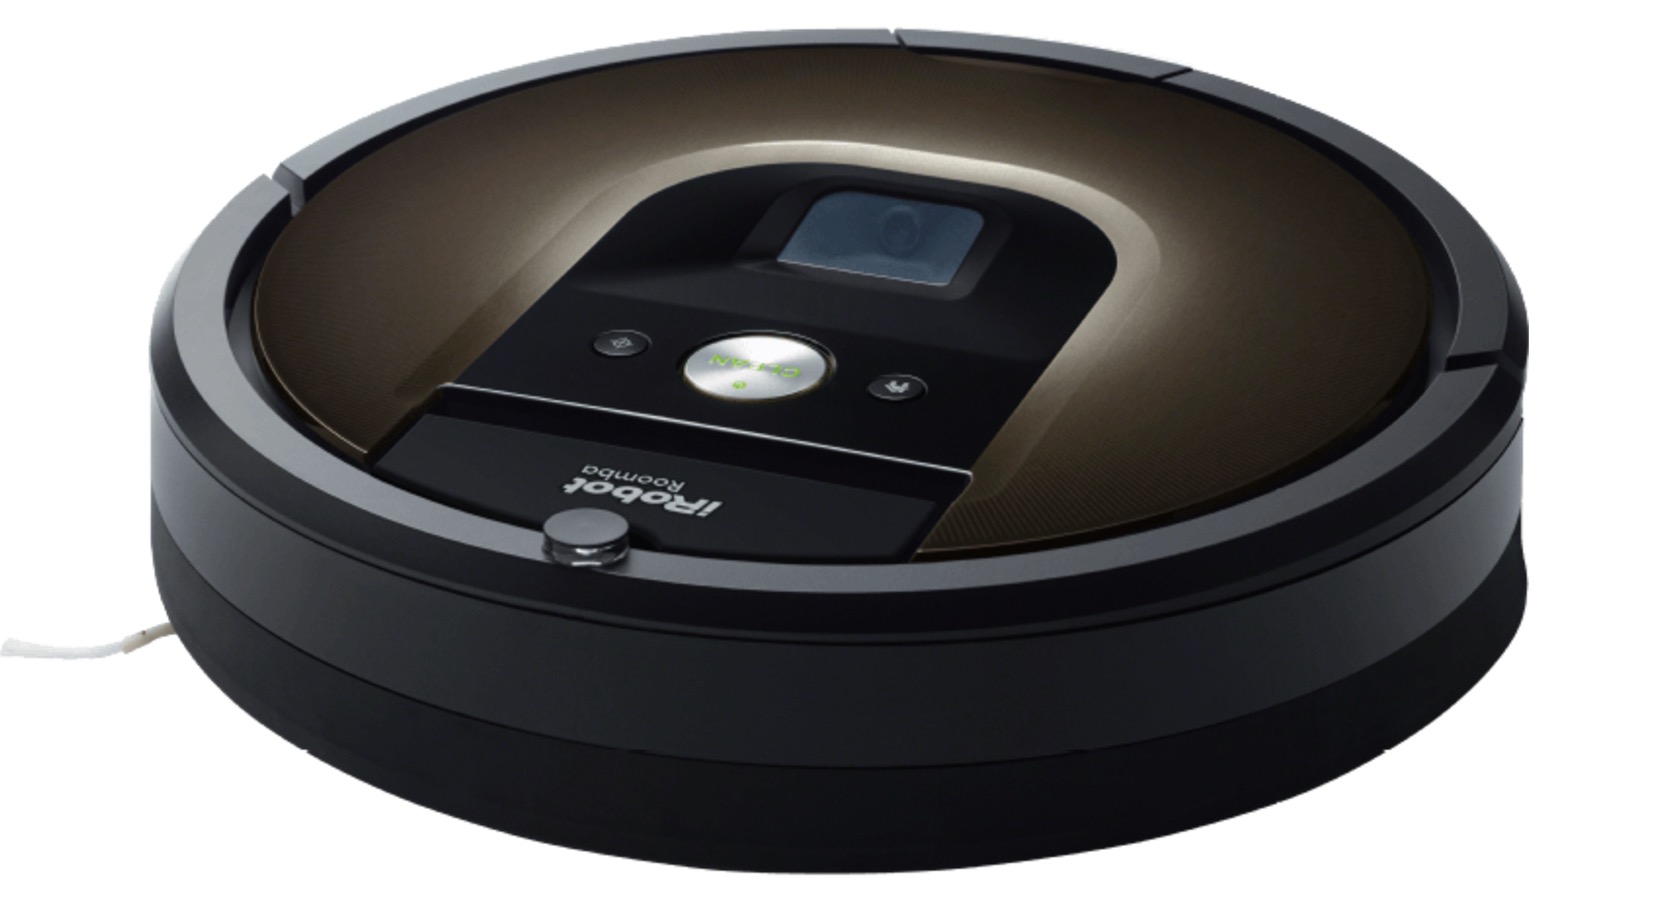 IROBOT Roomba 980 Saugroboter für nur 699,- Euro inkl. Versand